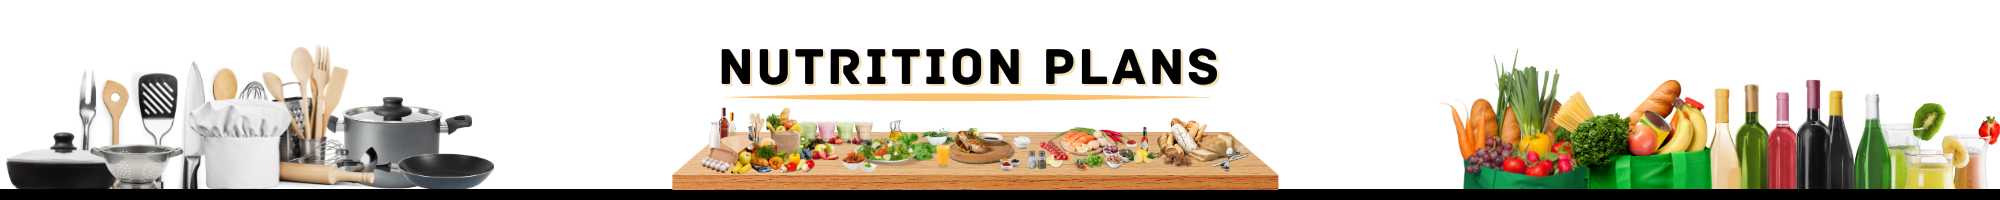 Nutrition Plans Banner